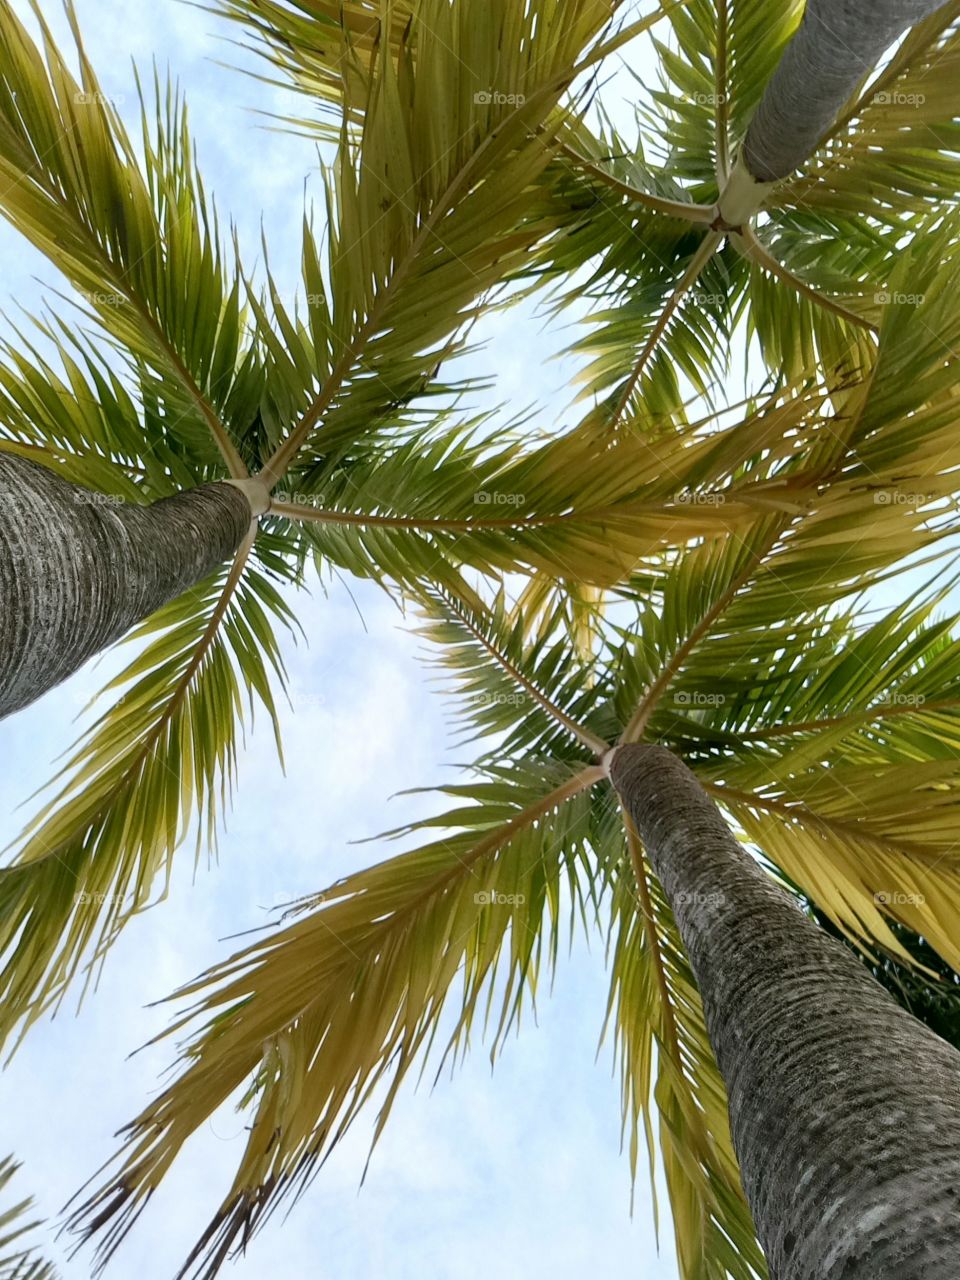 palm
tree
tall
nature